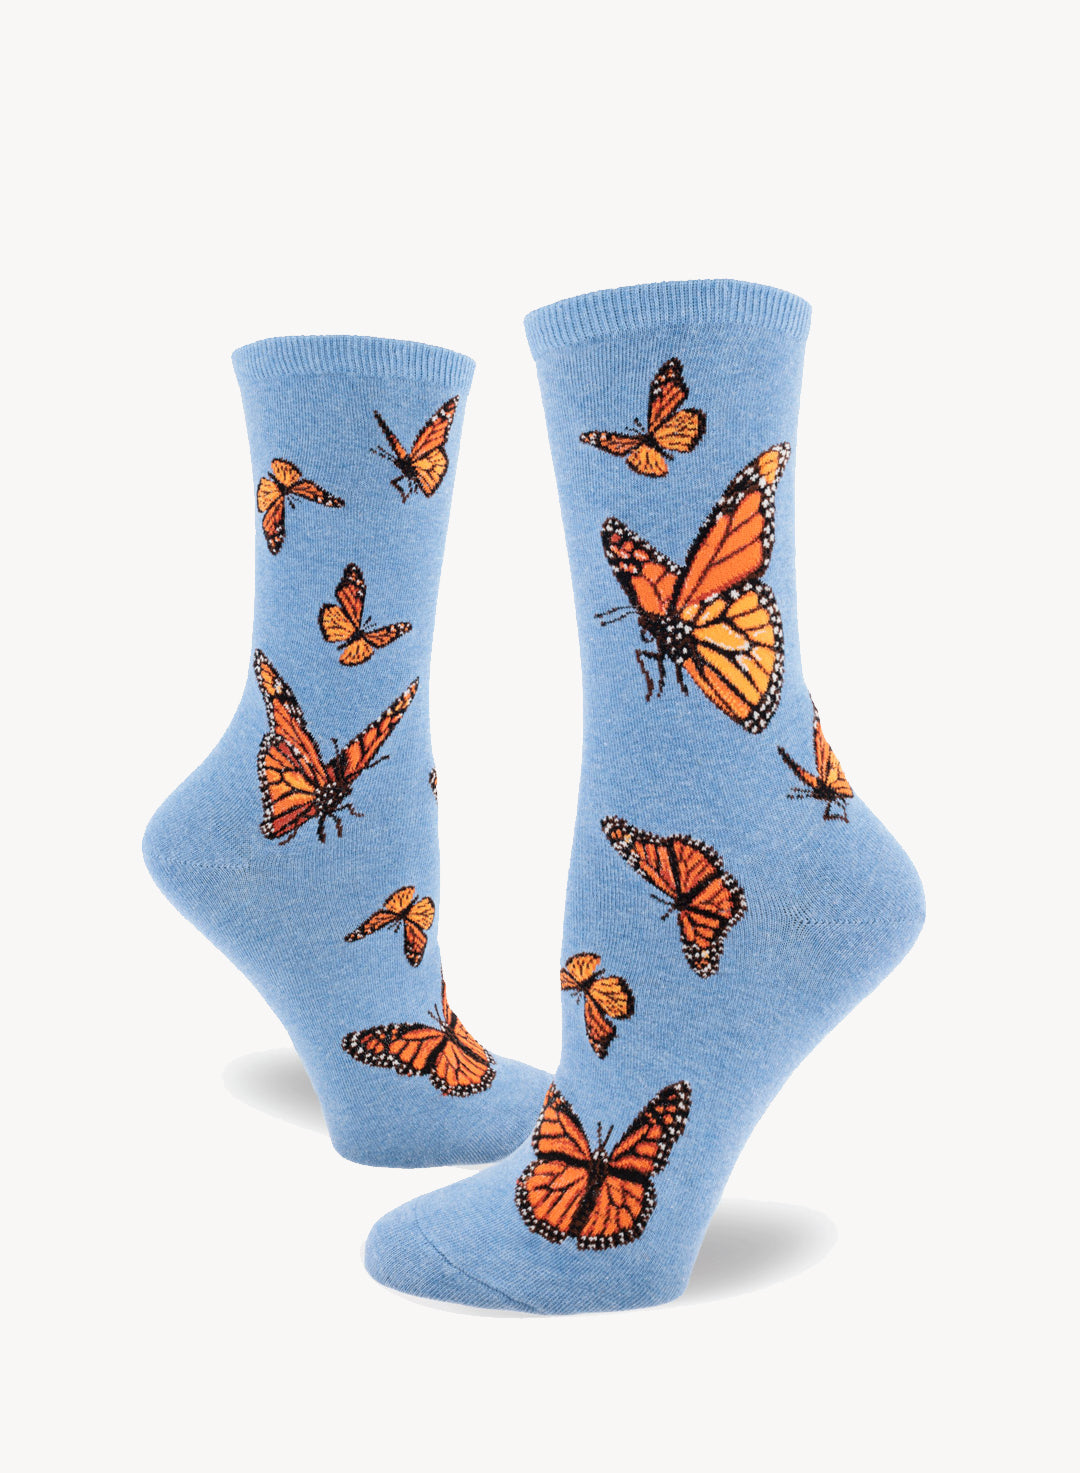 Socks-Monarch-cornflower.jpg